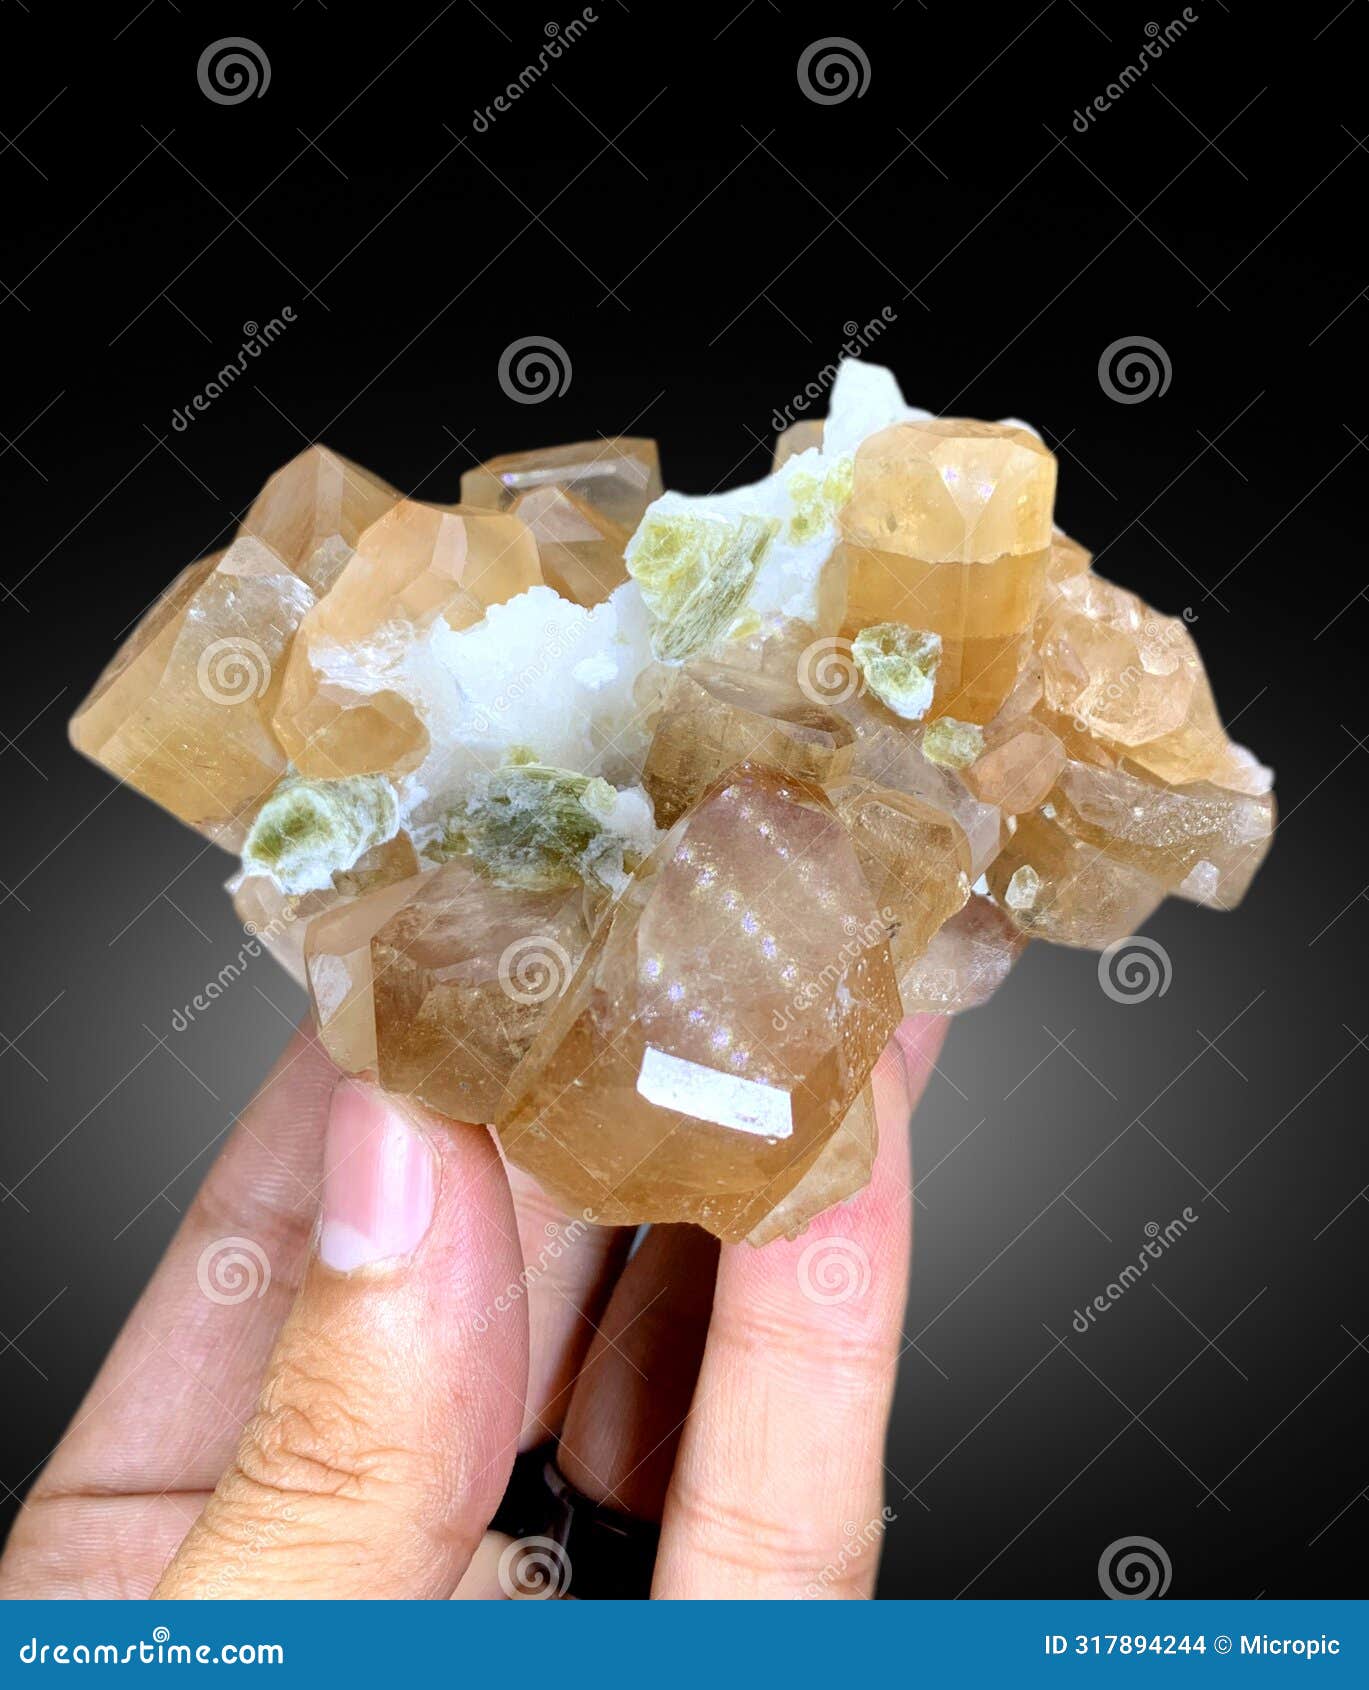 sherry brown topaz crystals mineral specimen from skardu pakistan